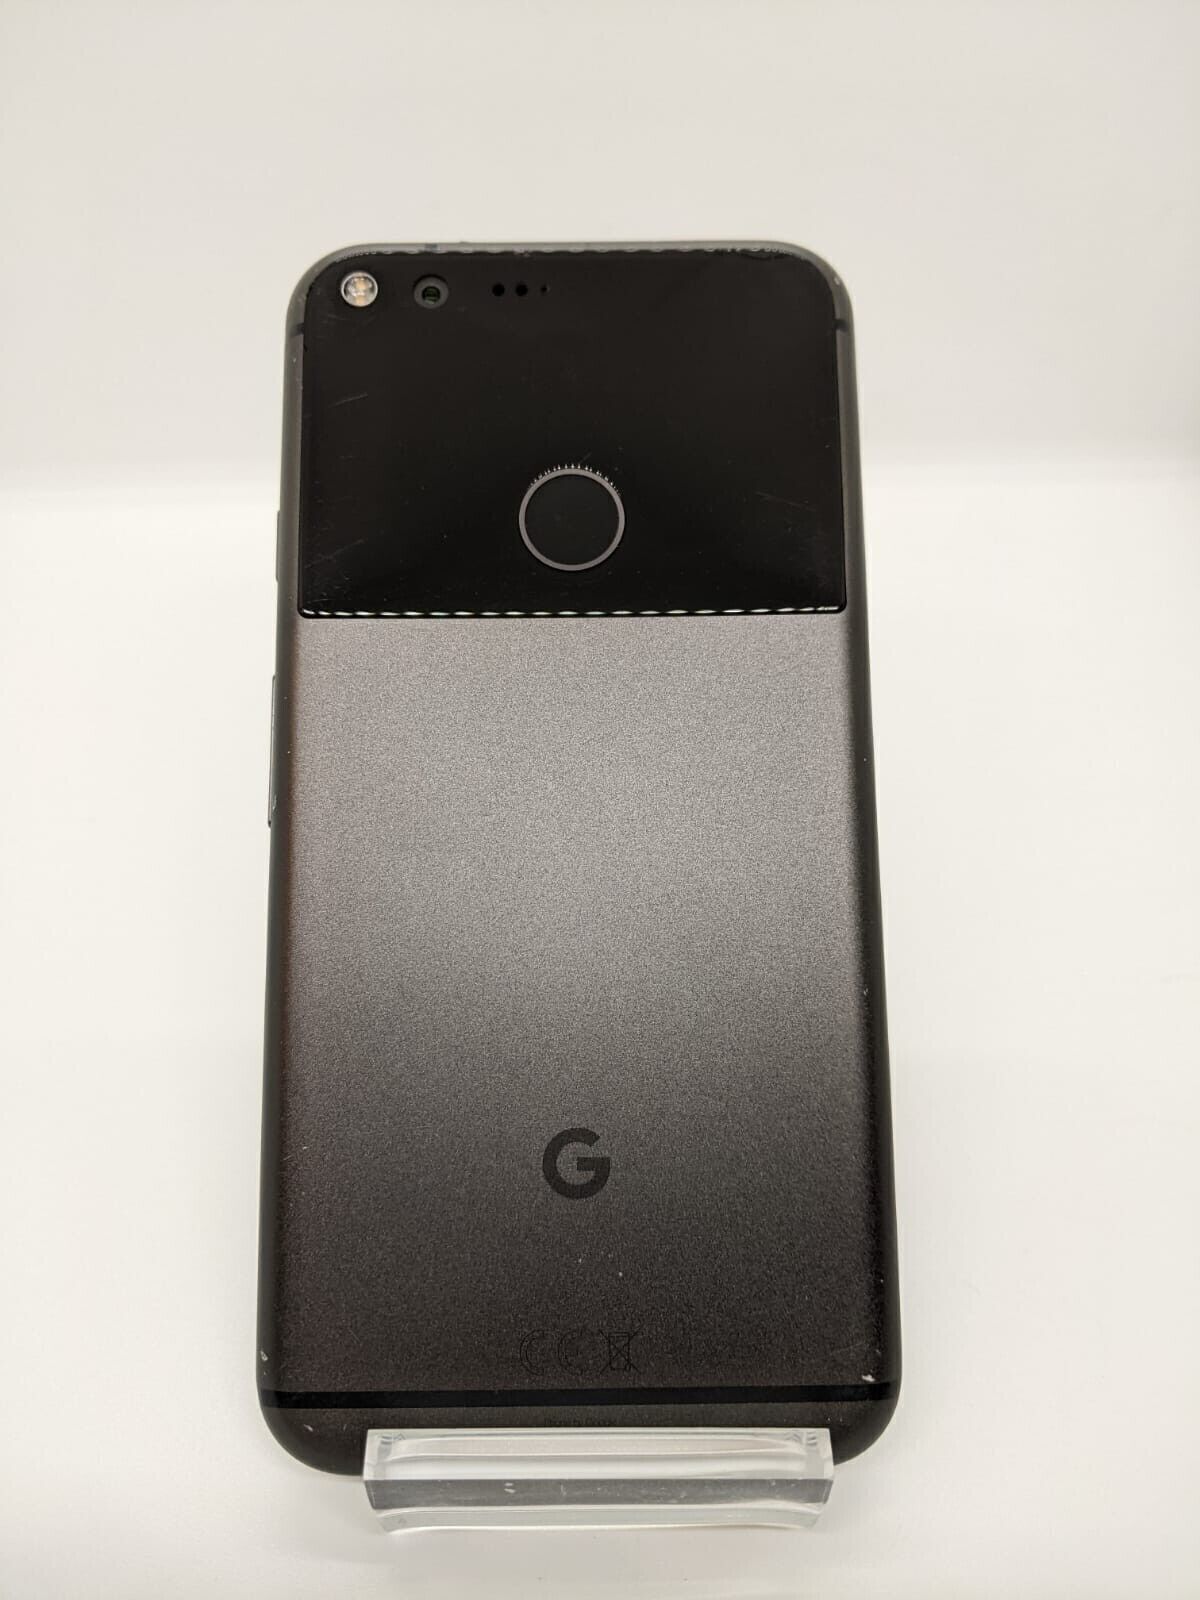 Google Pixel 32GB Unlocked Black Smartphone G-2PW4100 Unlockable Bootloader